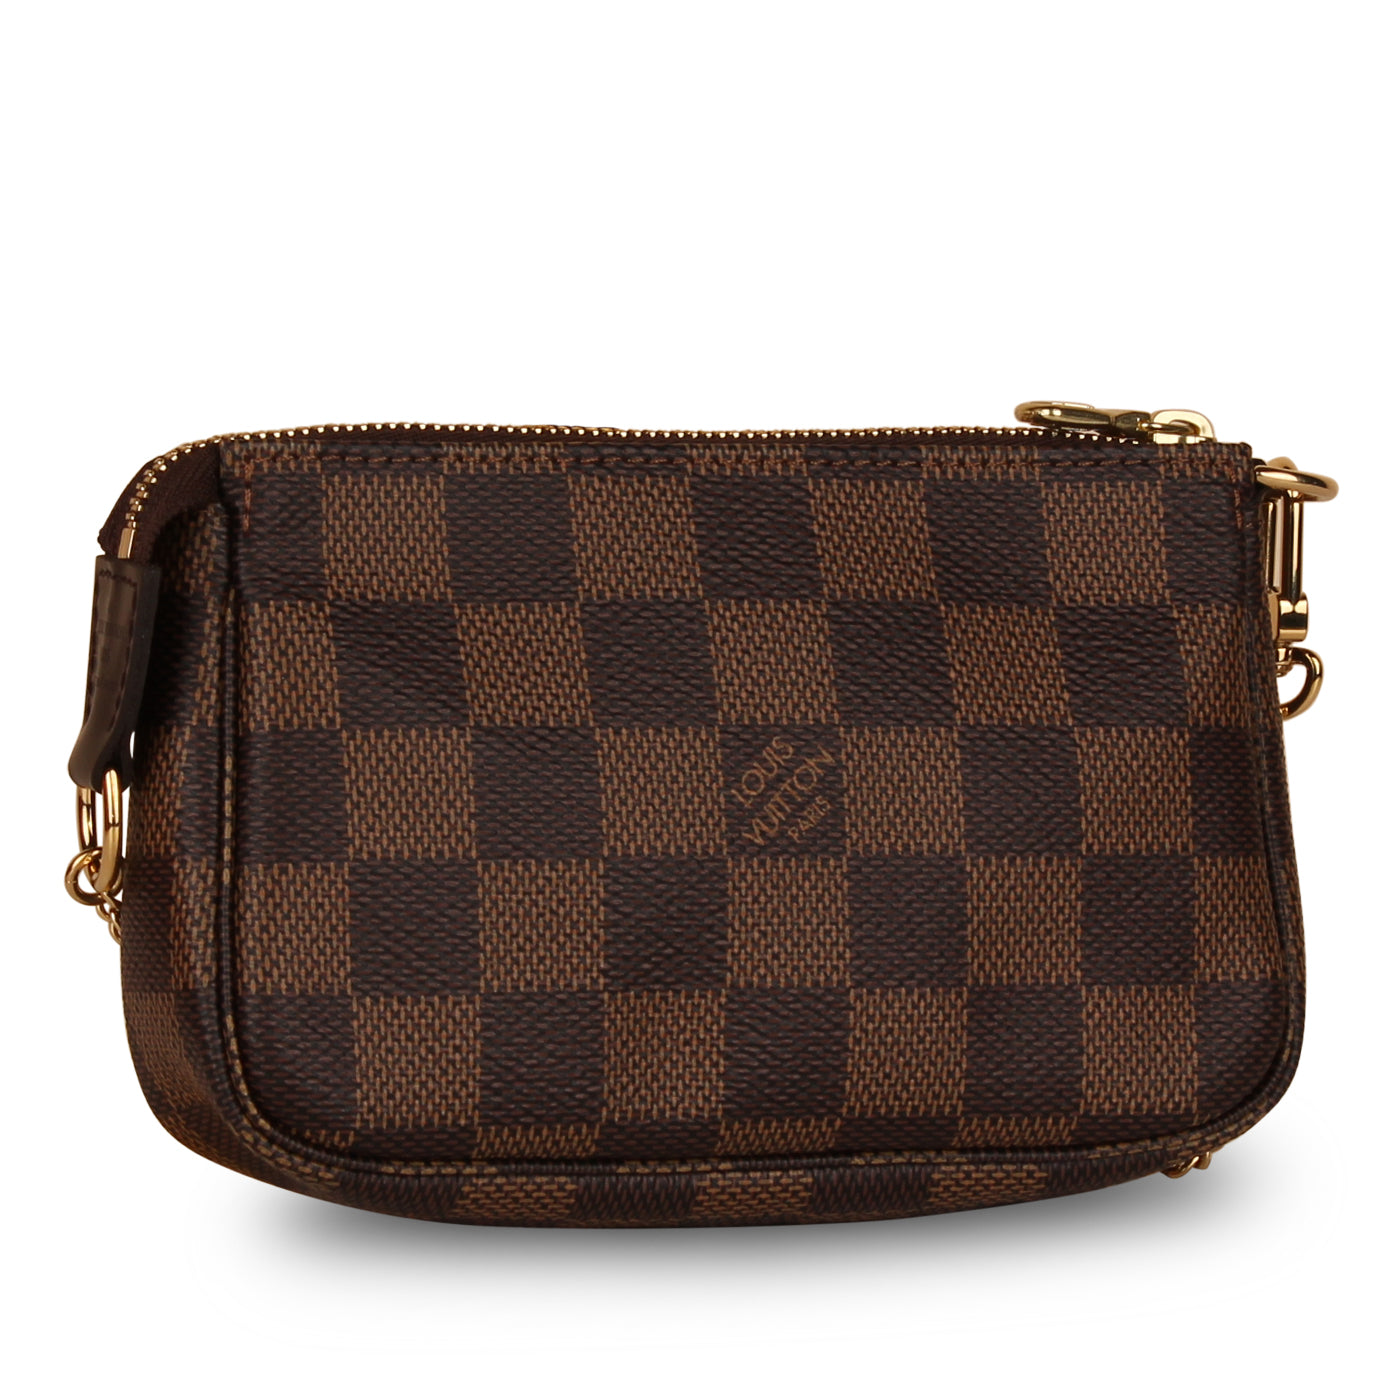 Buy Brown LV Checkered Mini Bag